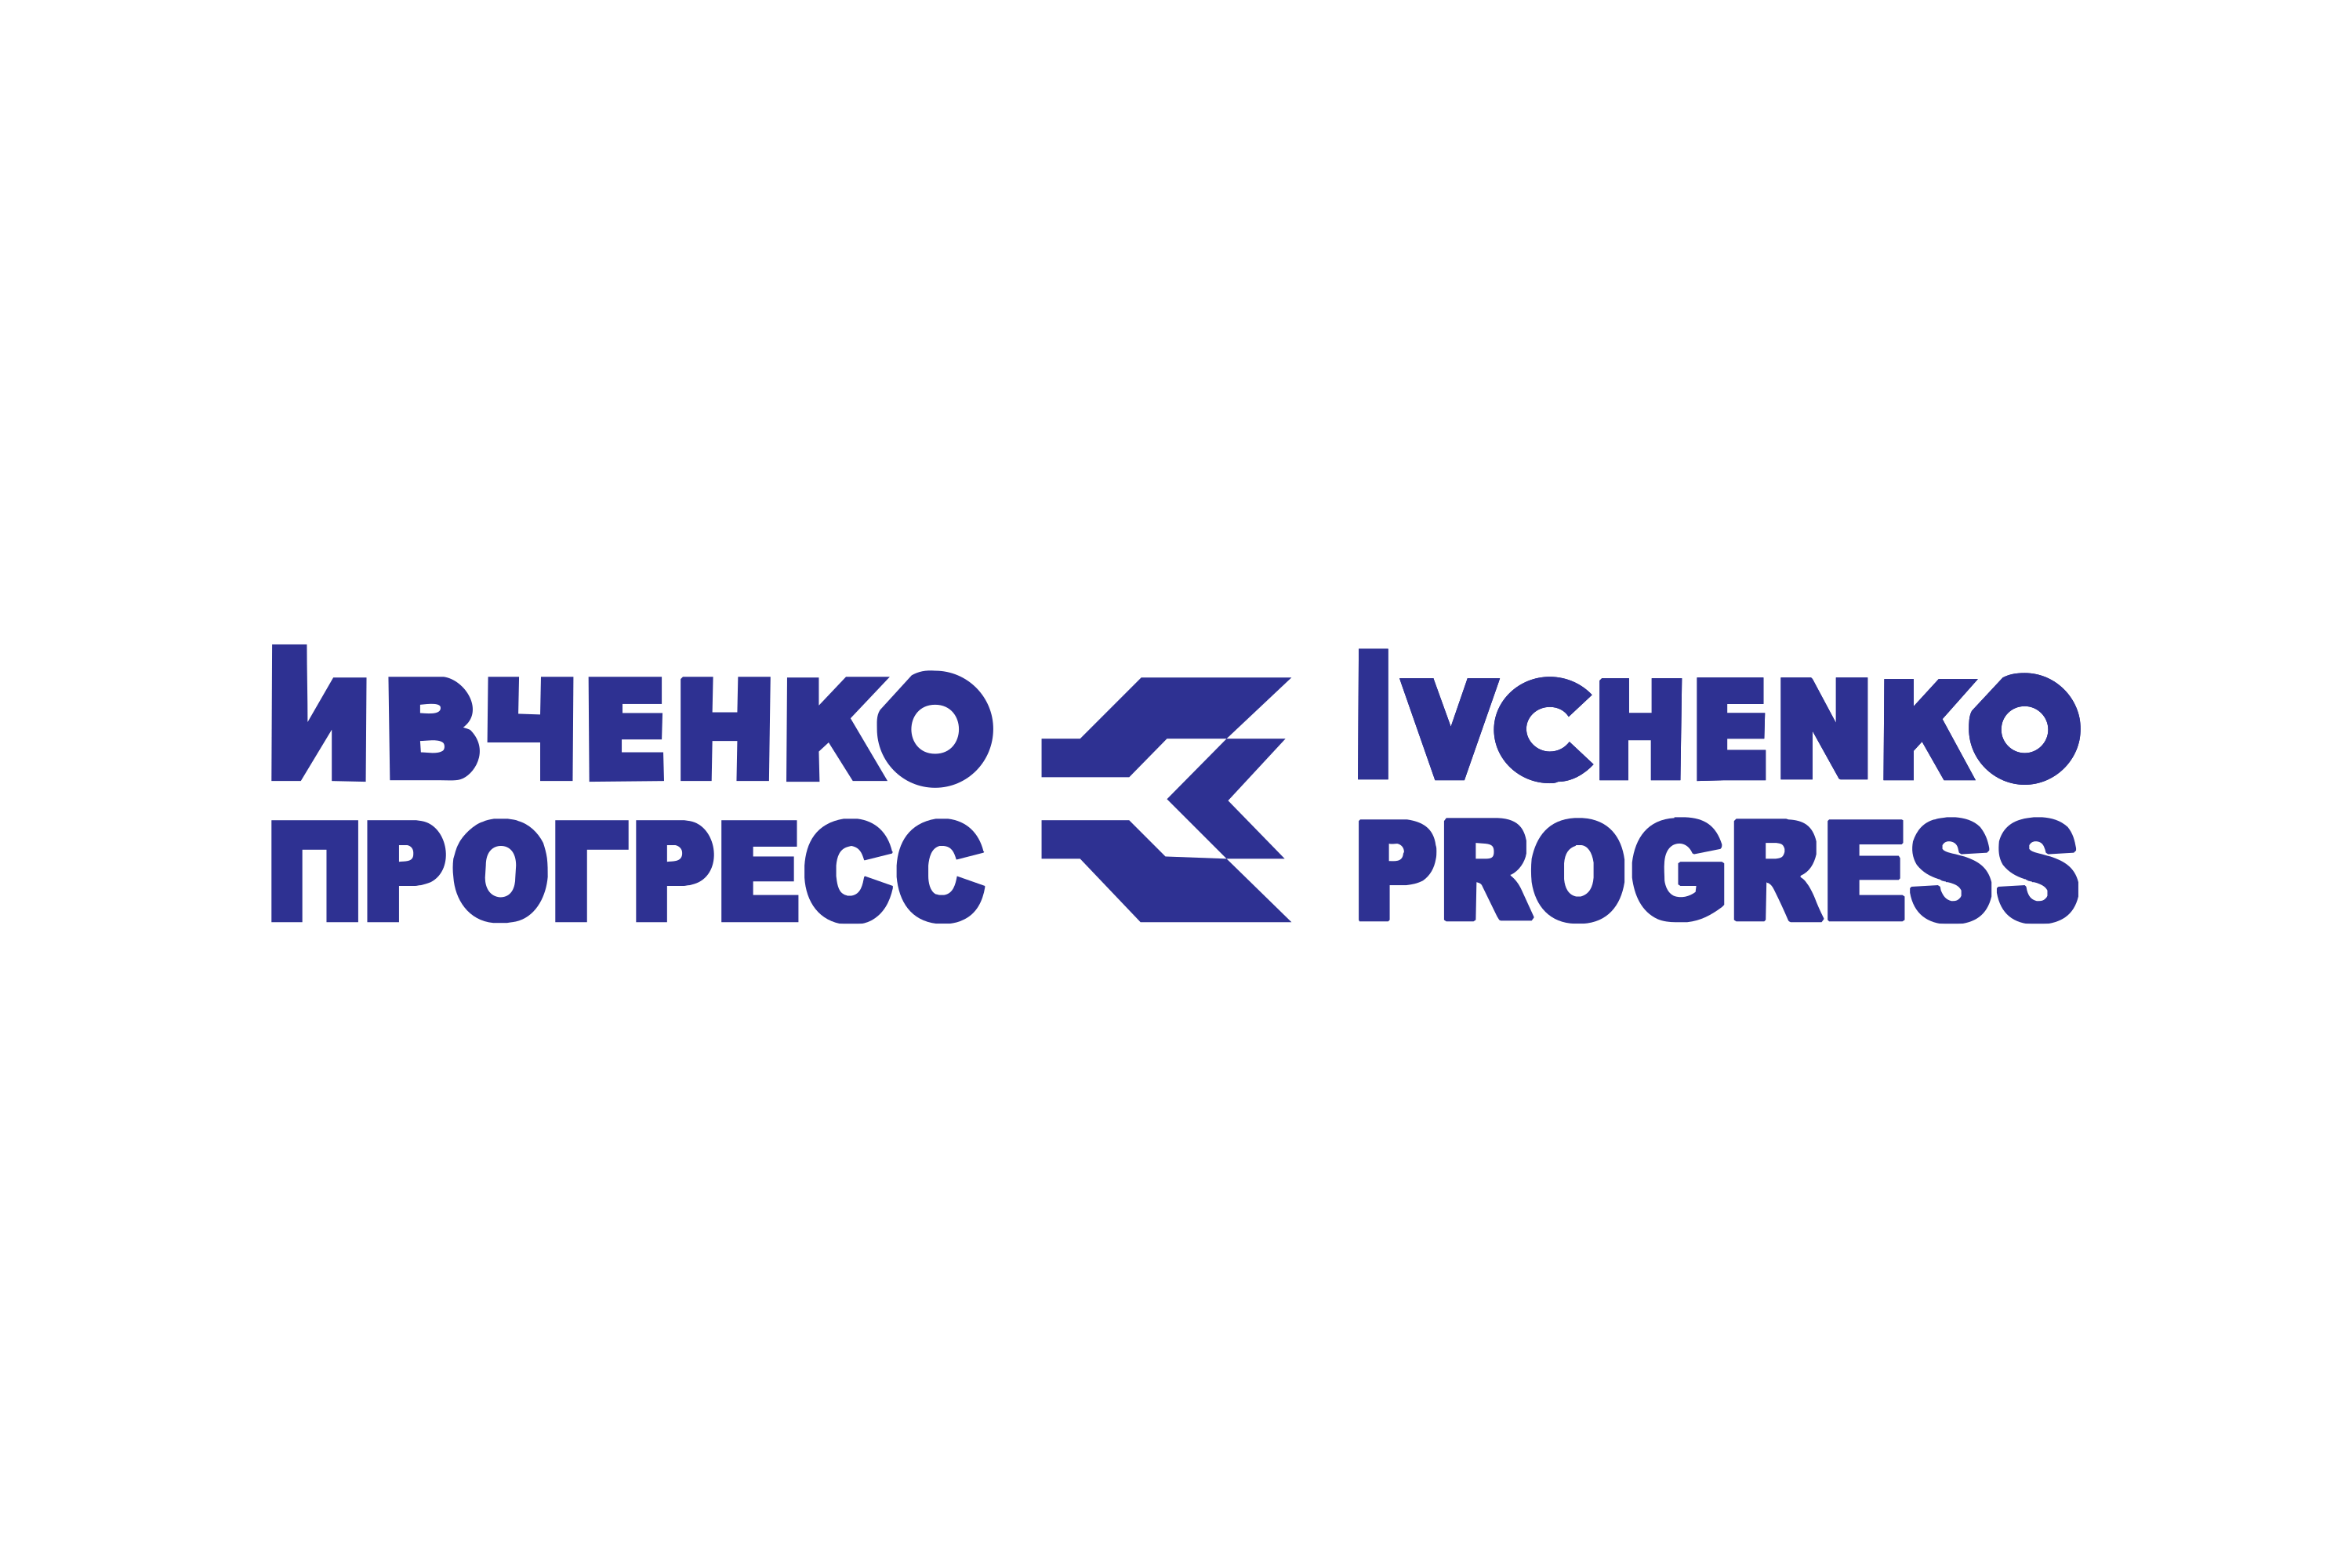 Ivchenko-Progress Logo